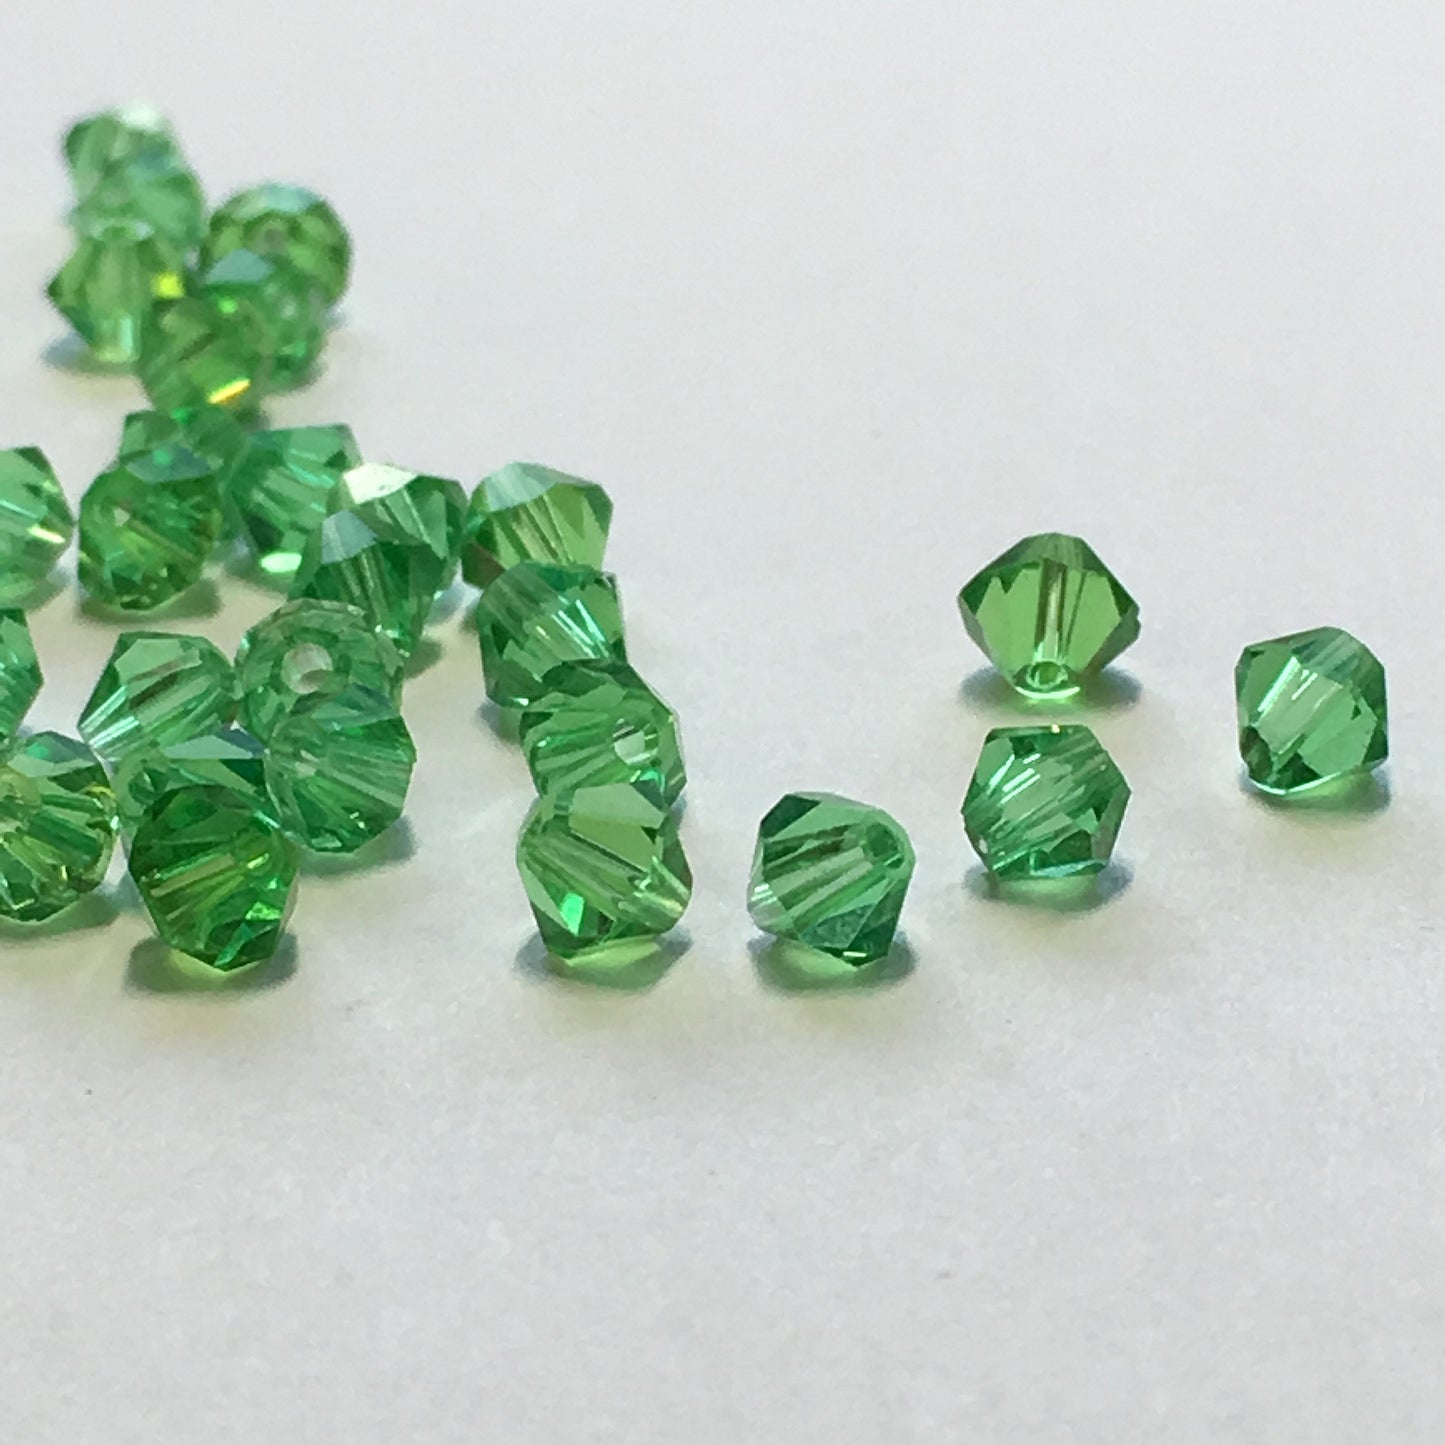 Swarovski Crystal Erinite Faceted Bicone Beads, 4 mm, 34 Beads